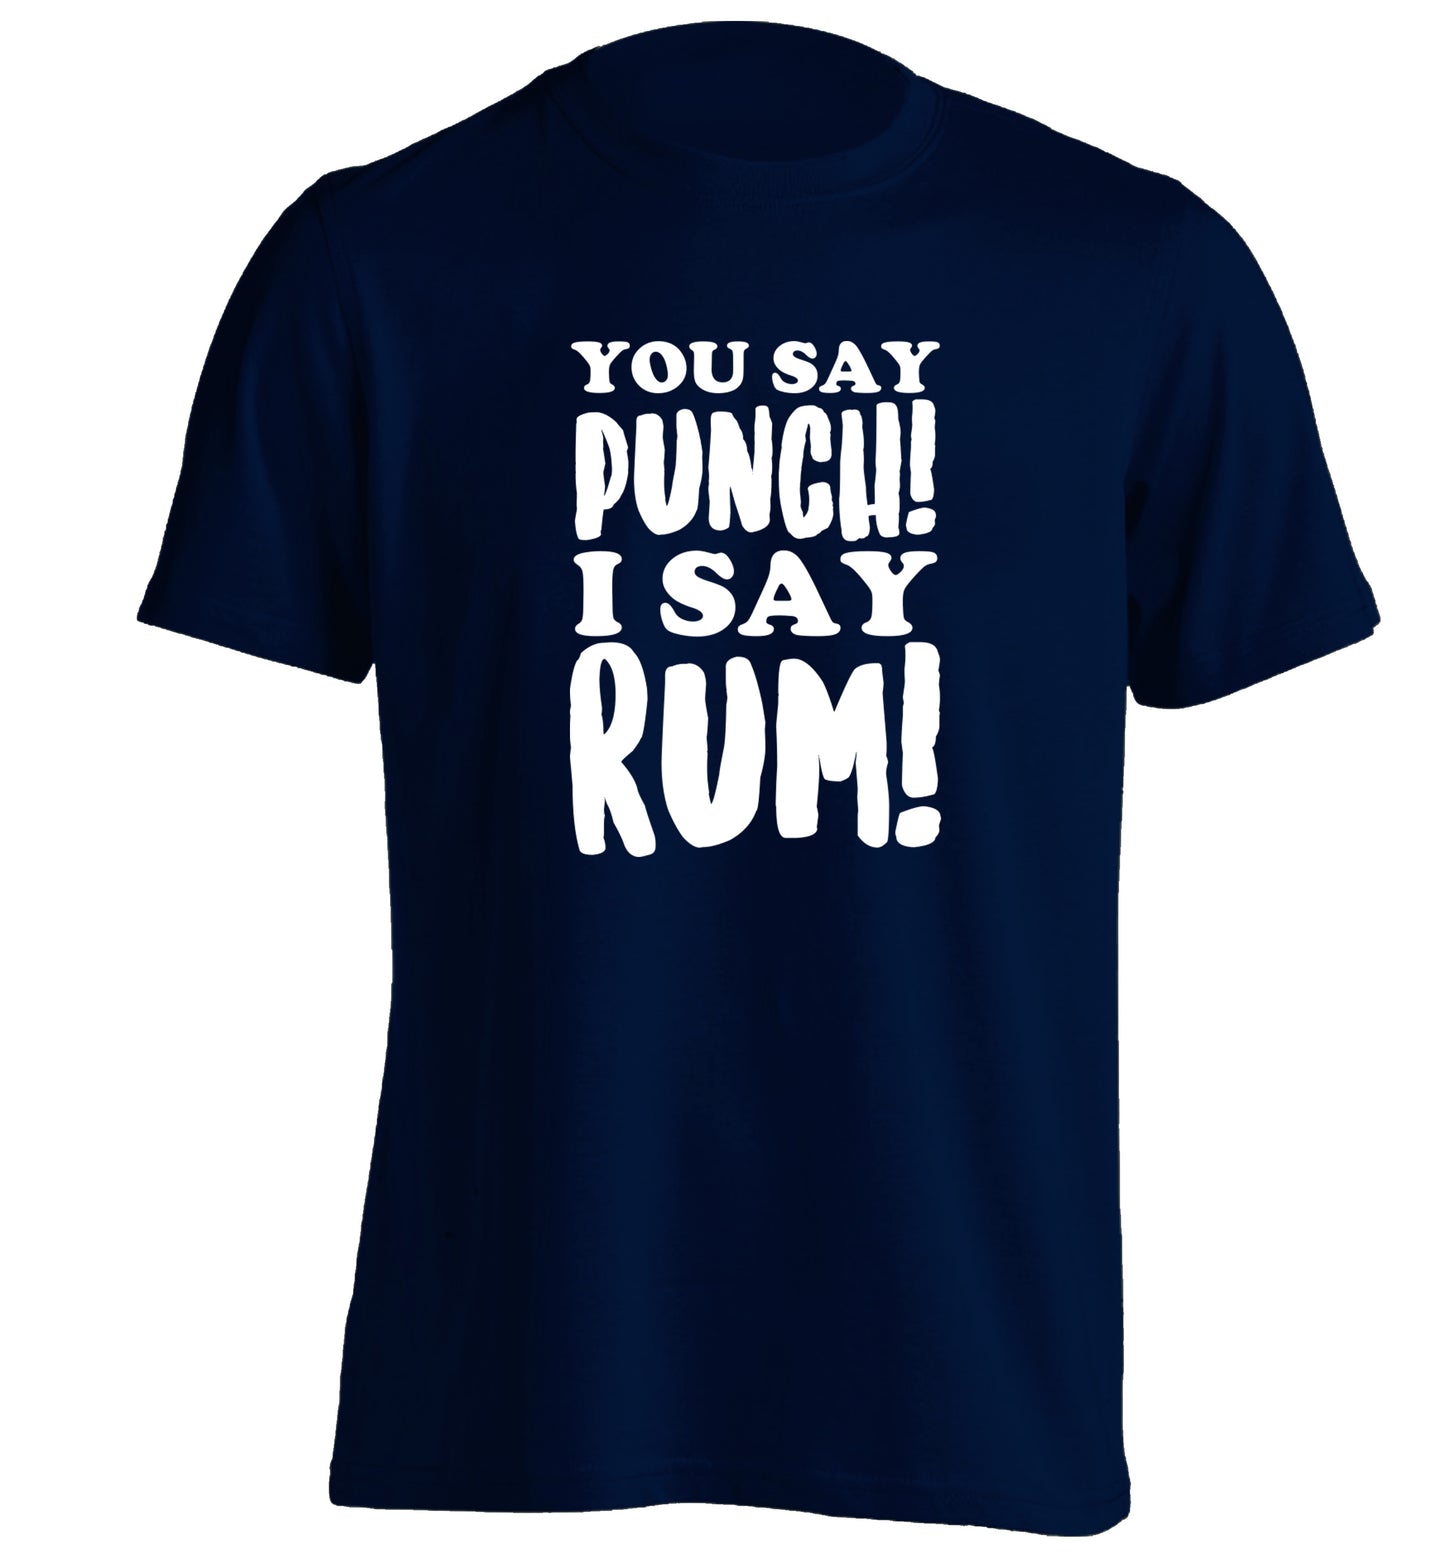 You say punch I say rum! adults unisex navy Tshirt 2XL